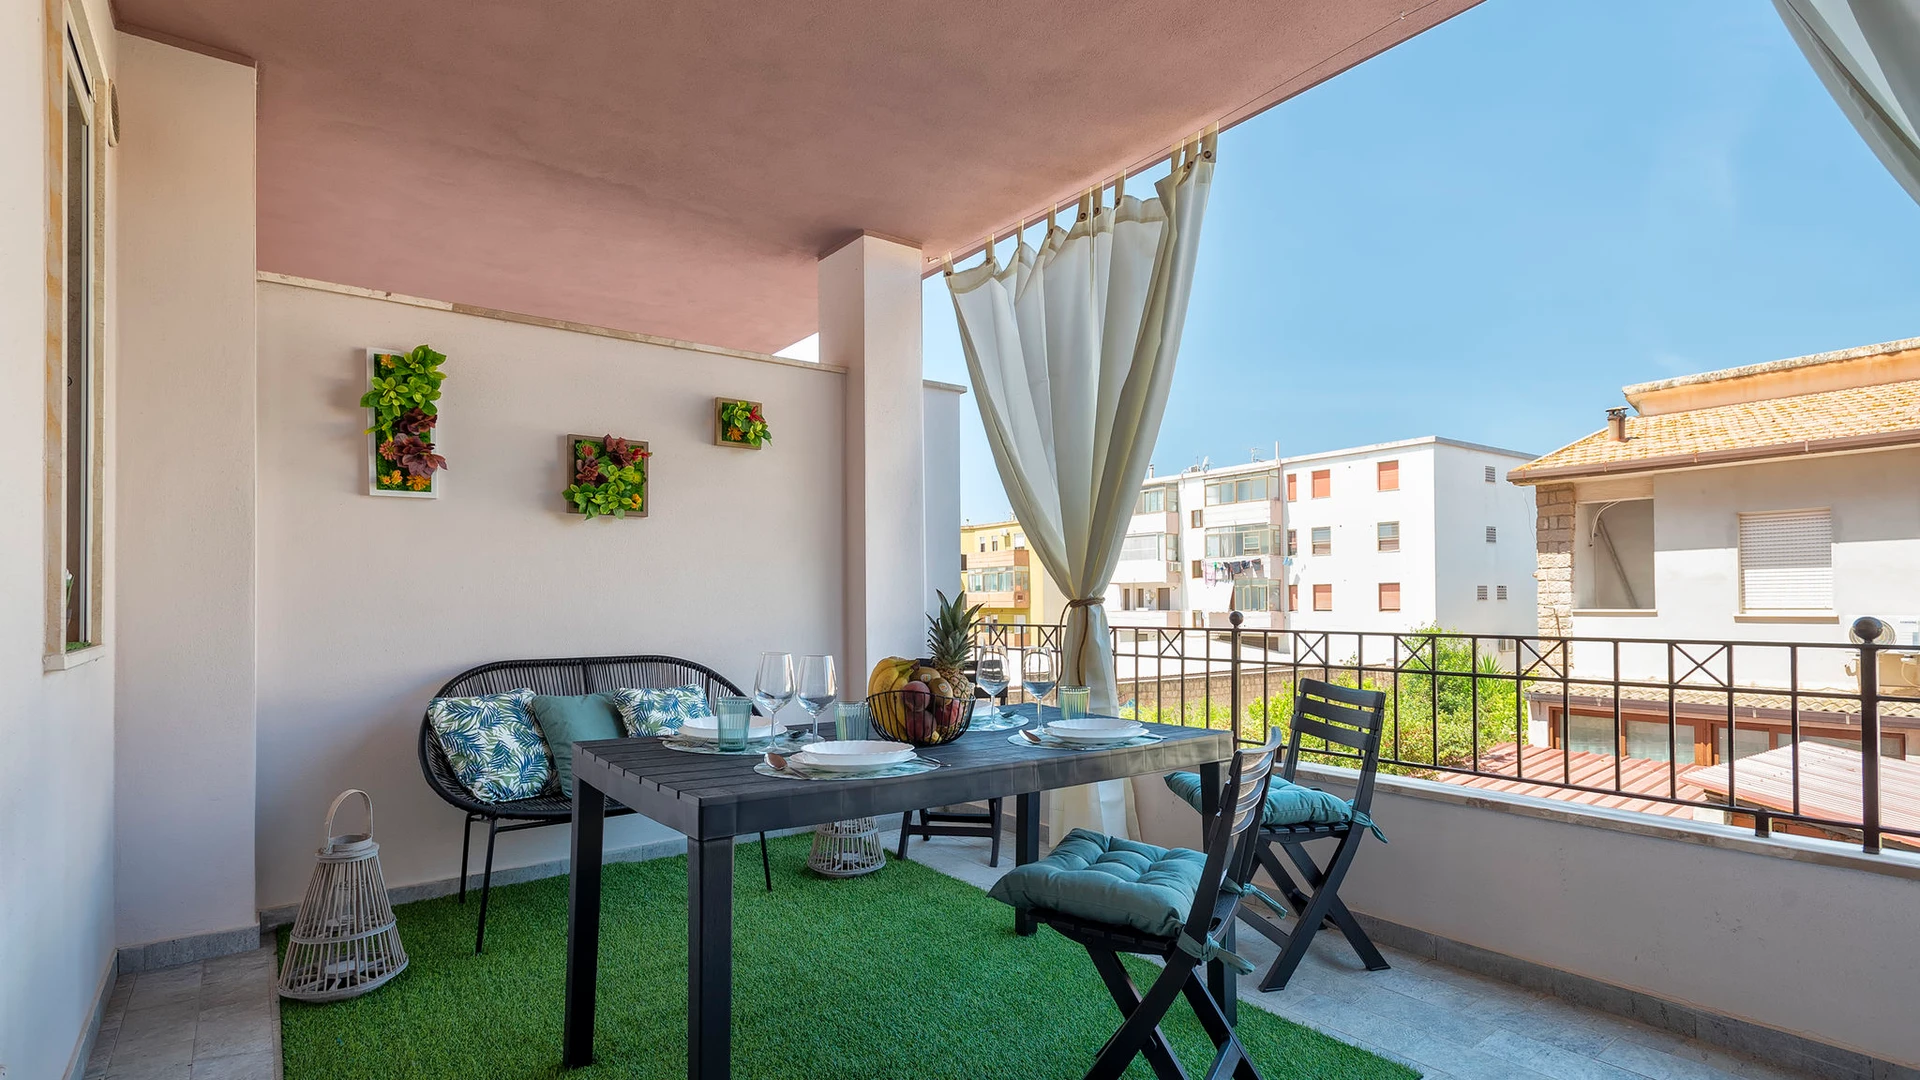 Two bedroom accommodation in L'alguer-alghero